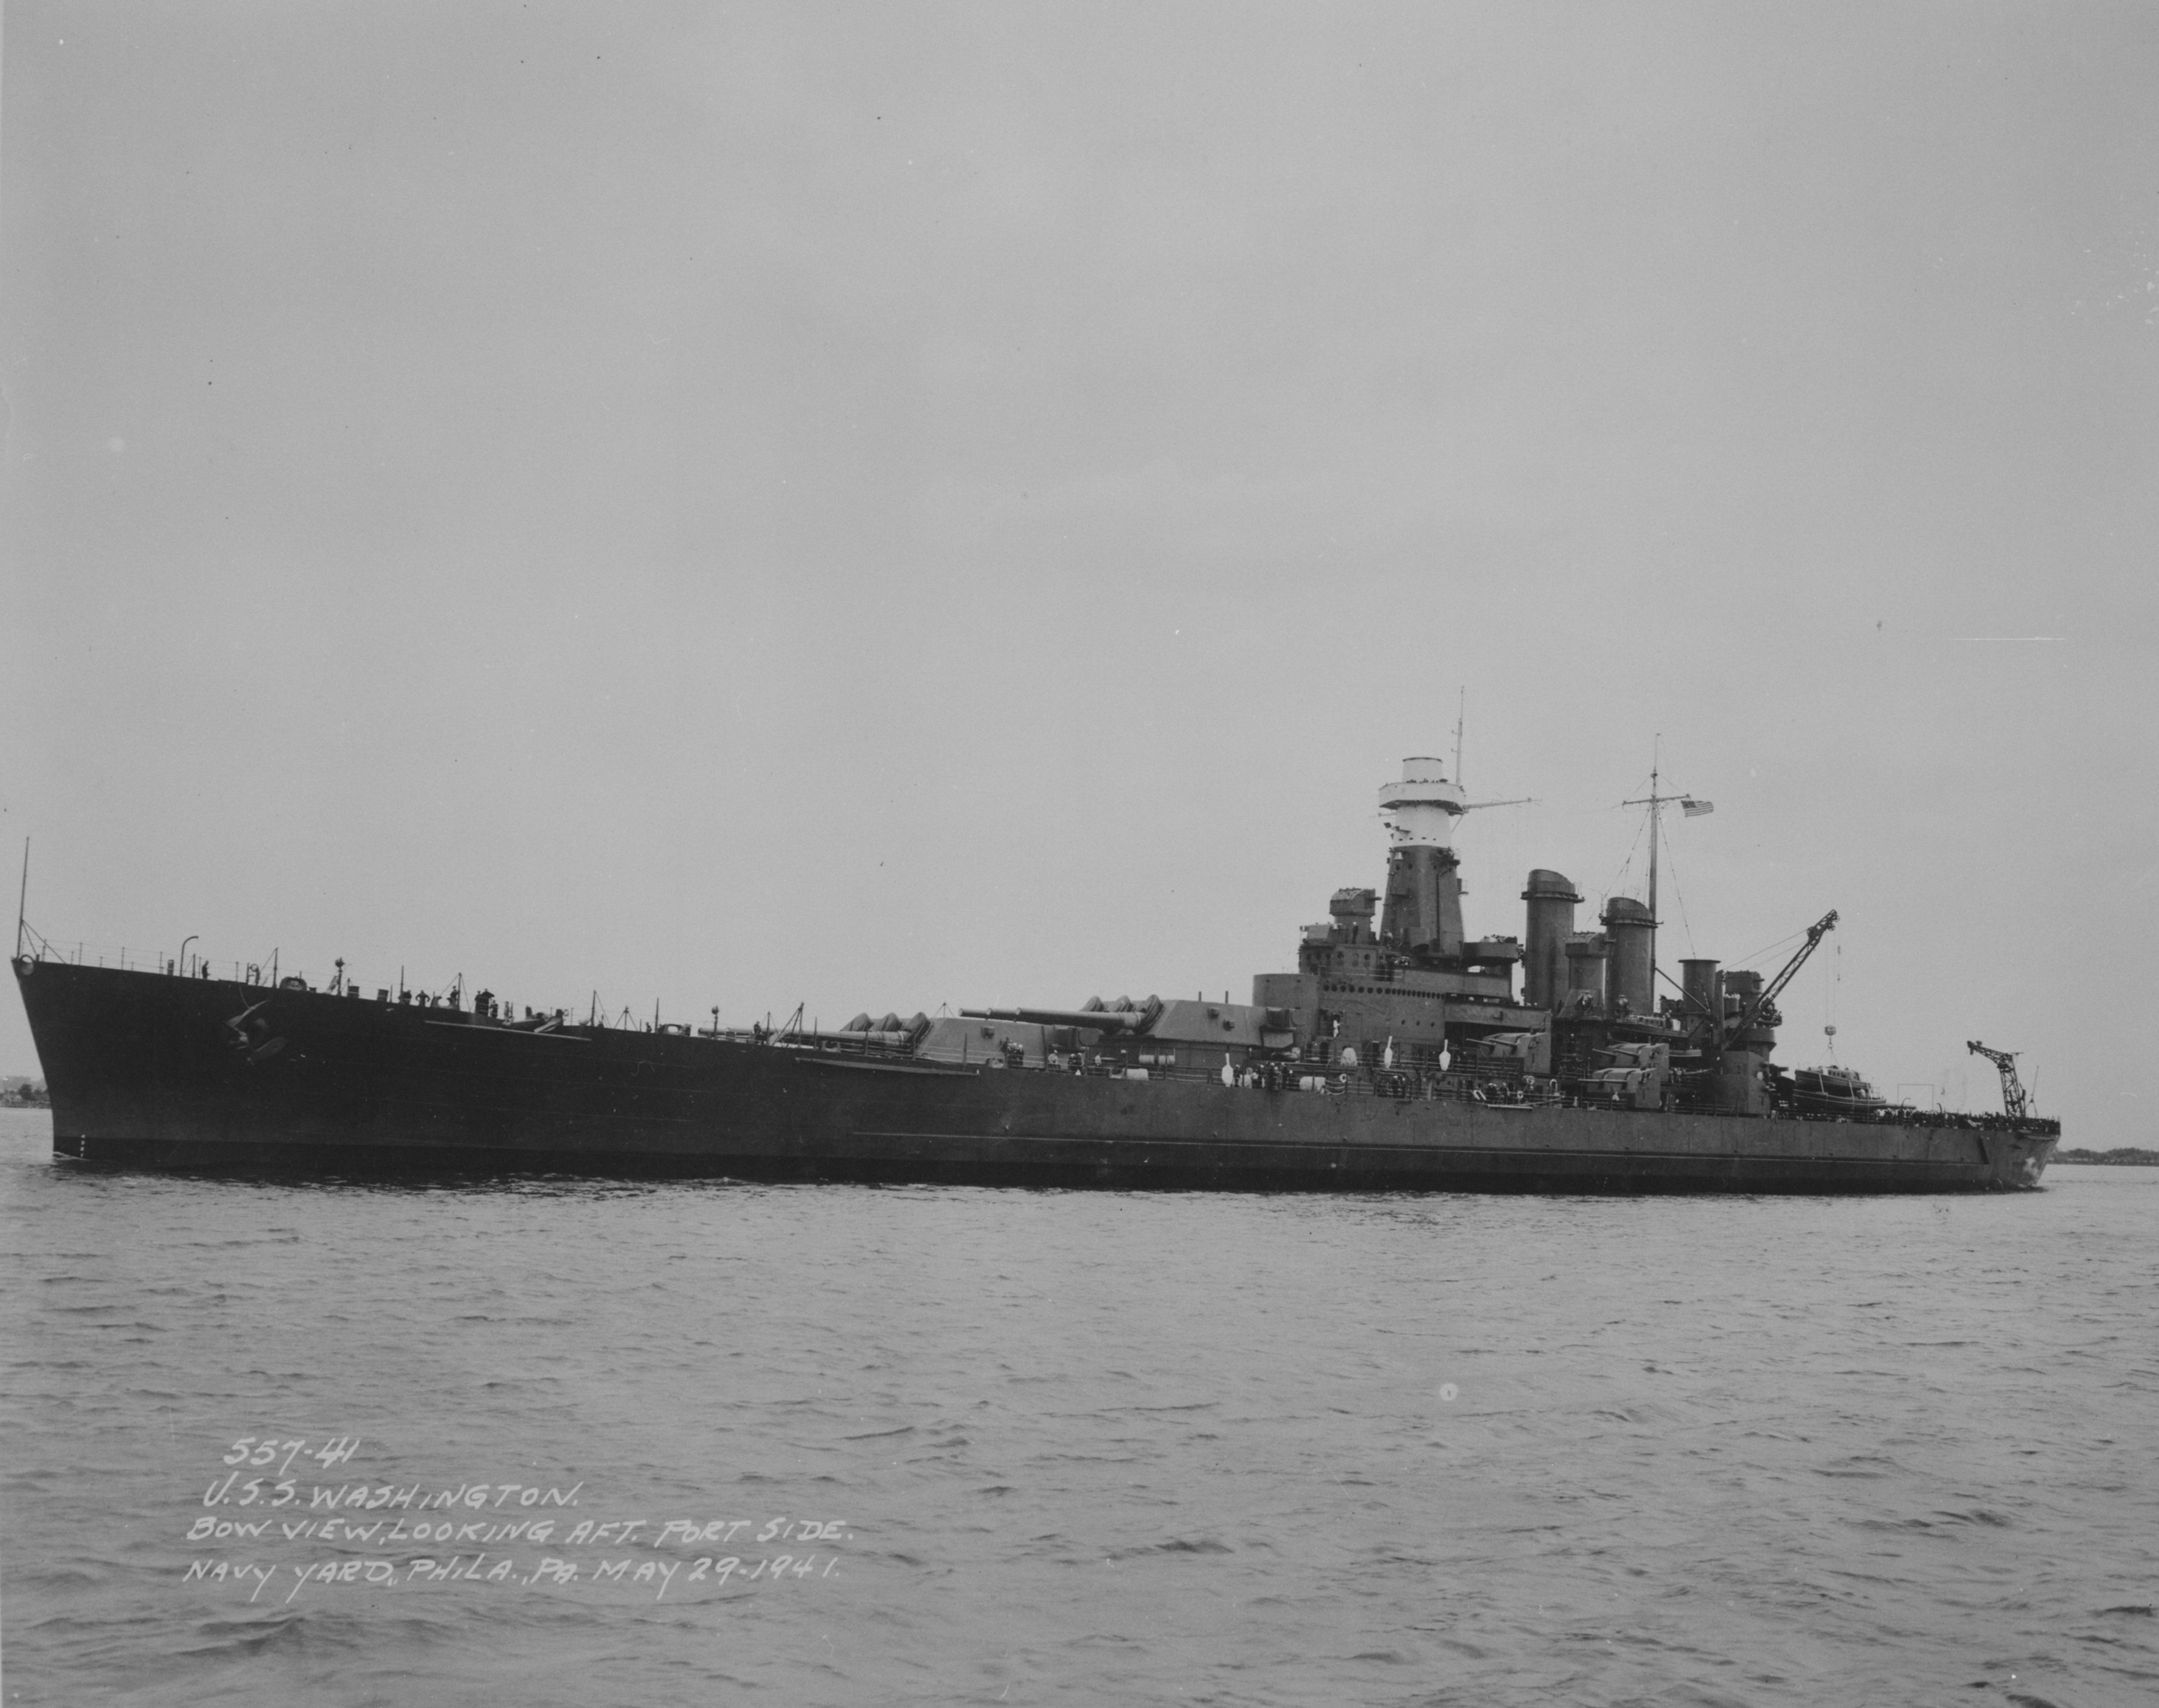 USS Washington, Philadelphia, Pennsylvania, United States, 29 May 1941